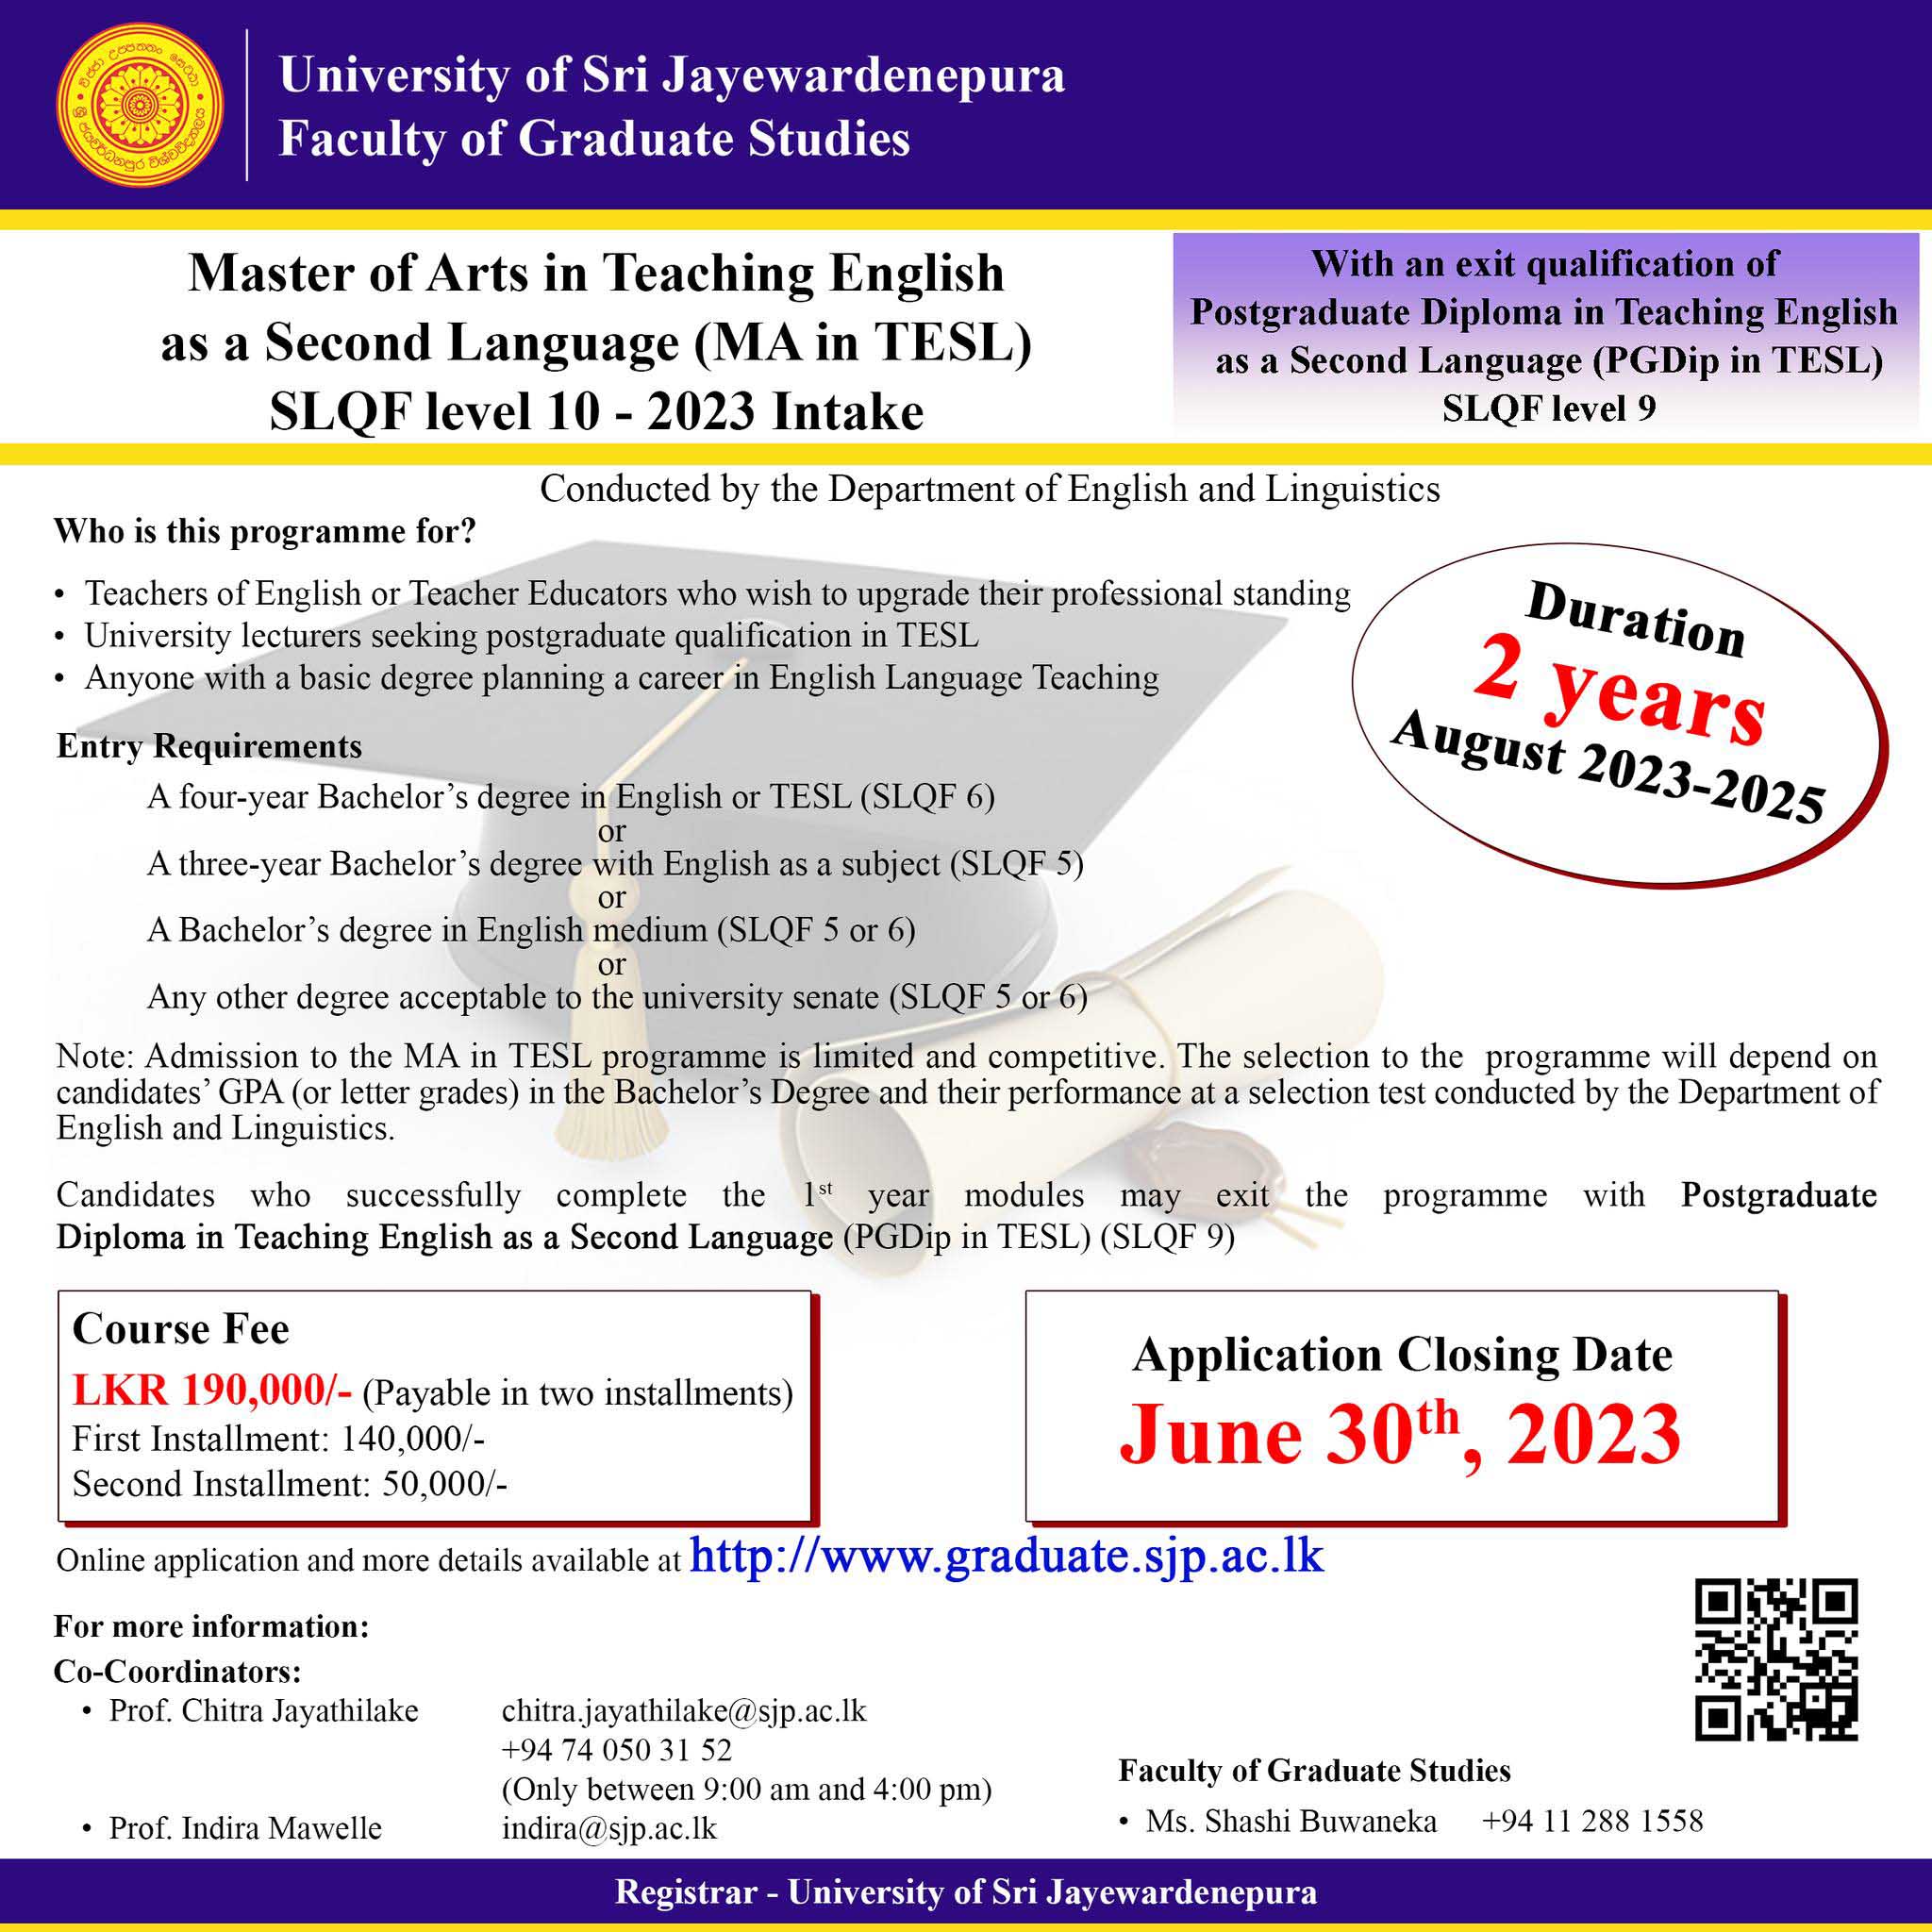 Master of Arts in Teaching English as a Second Language (MA in TESL) 2023 - University of Sri Jayewardenepura